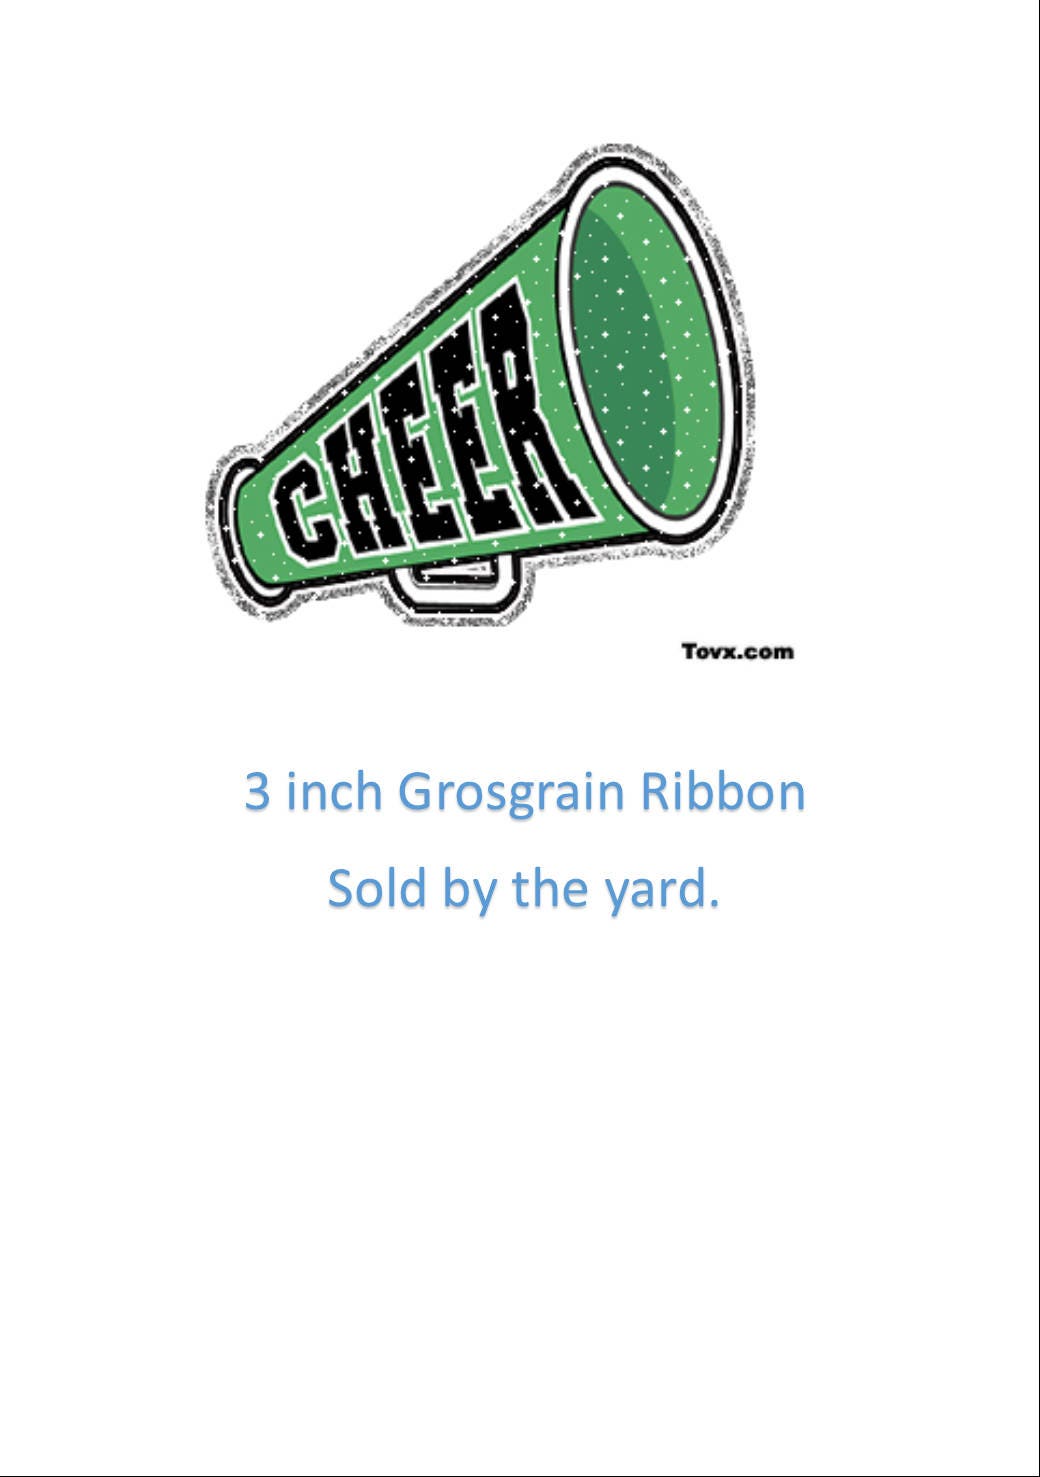 3" Wide White Grosgrain Ribbon - Grosgrain Ribbon by the yard -  Cheer Ribbon - Boutique Bow Ribbon